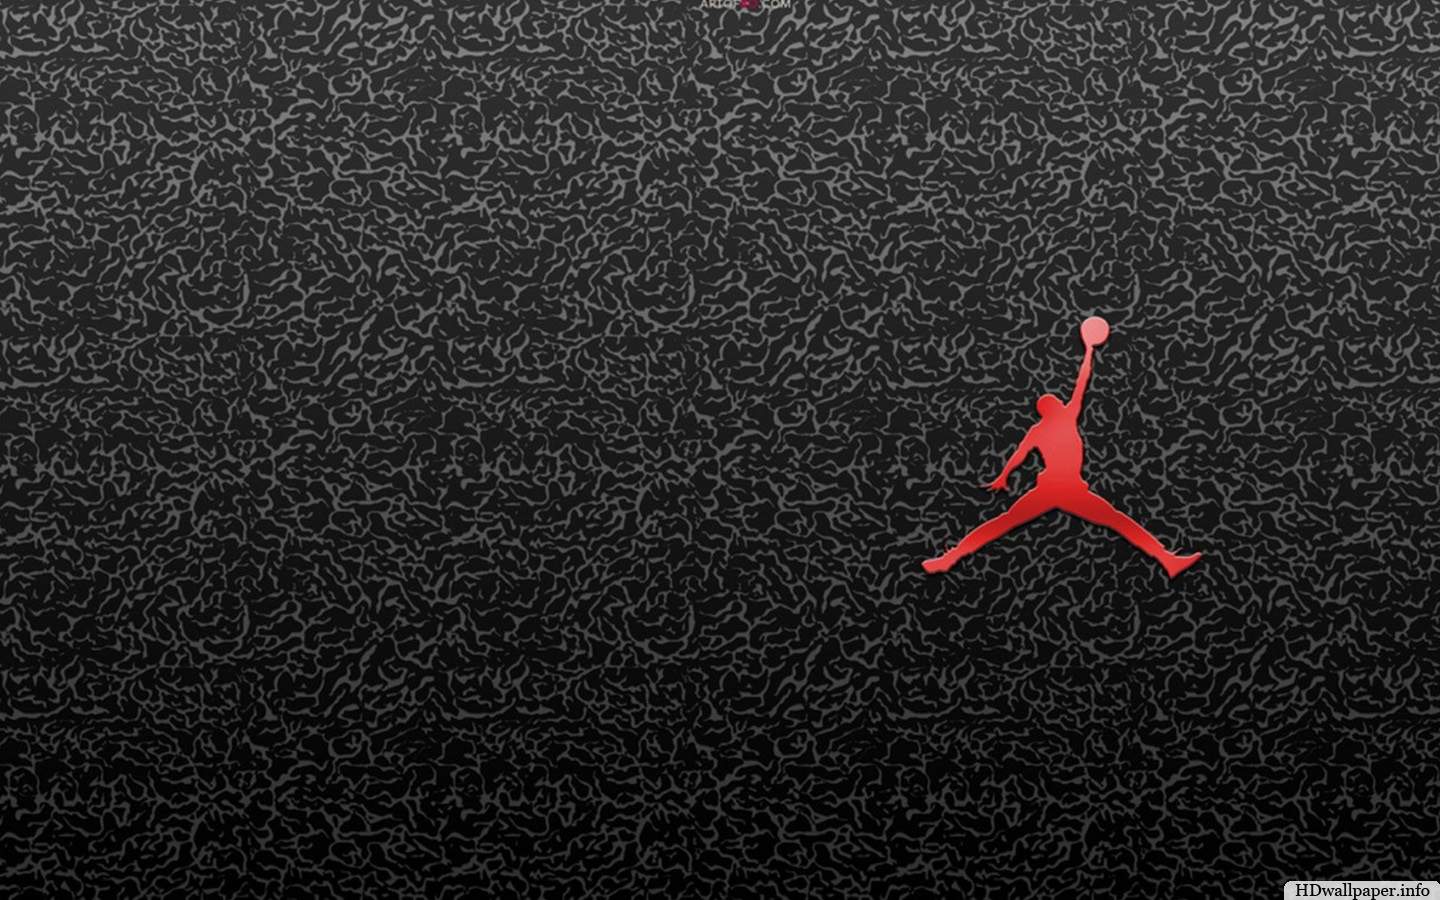 Air Jordan Logo Wallpaper HD